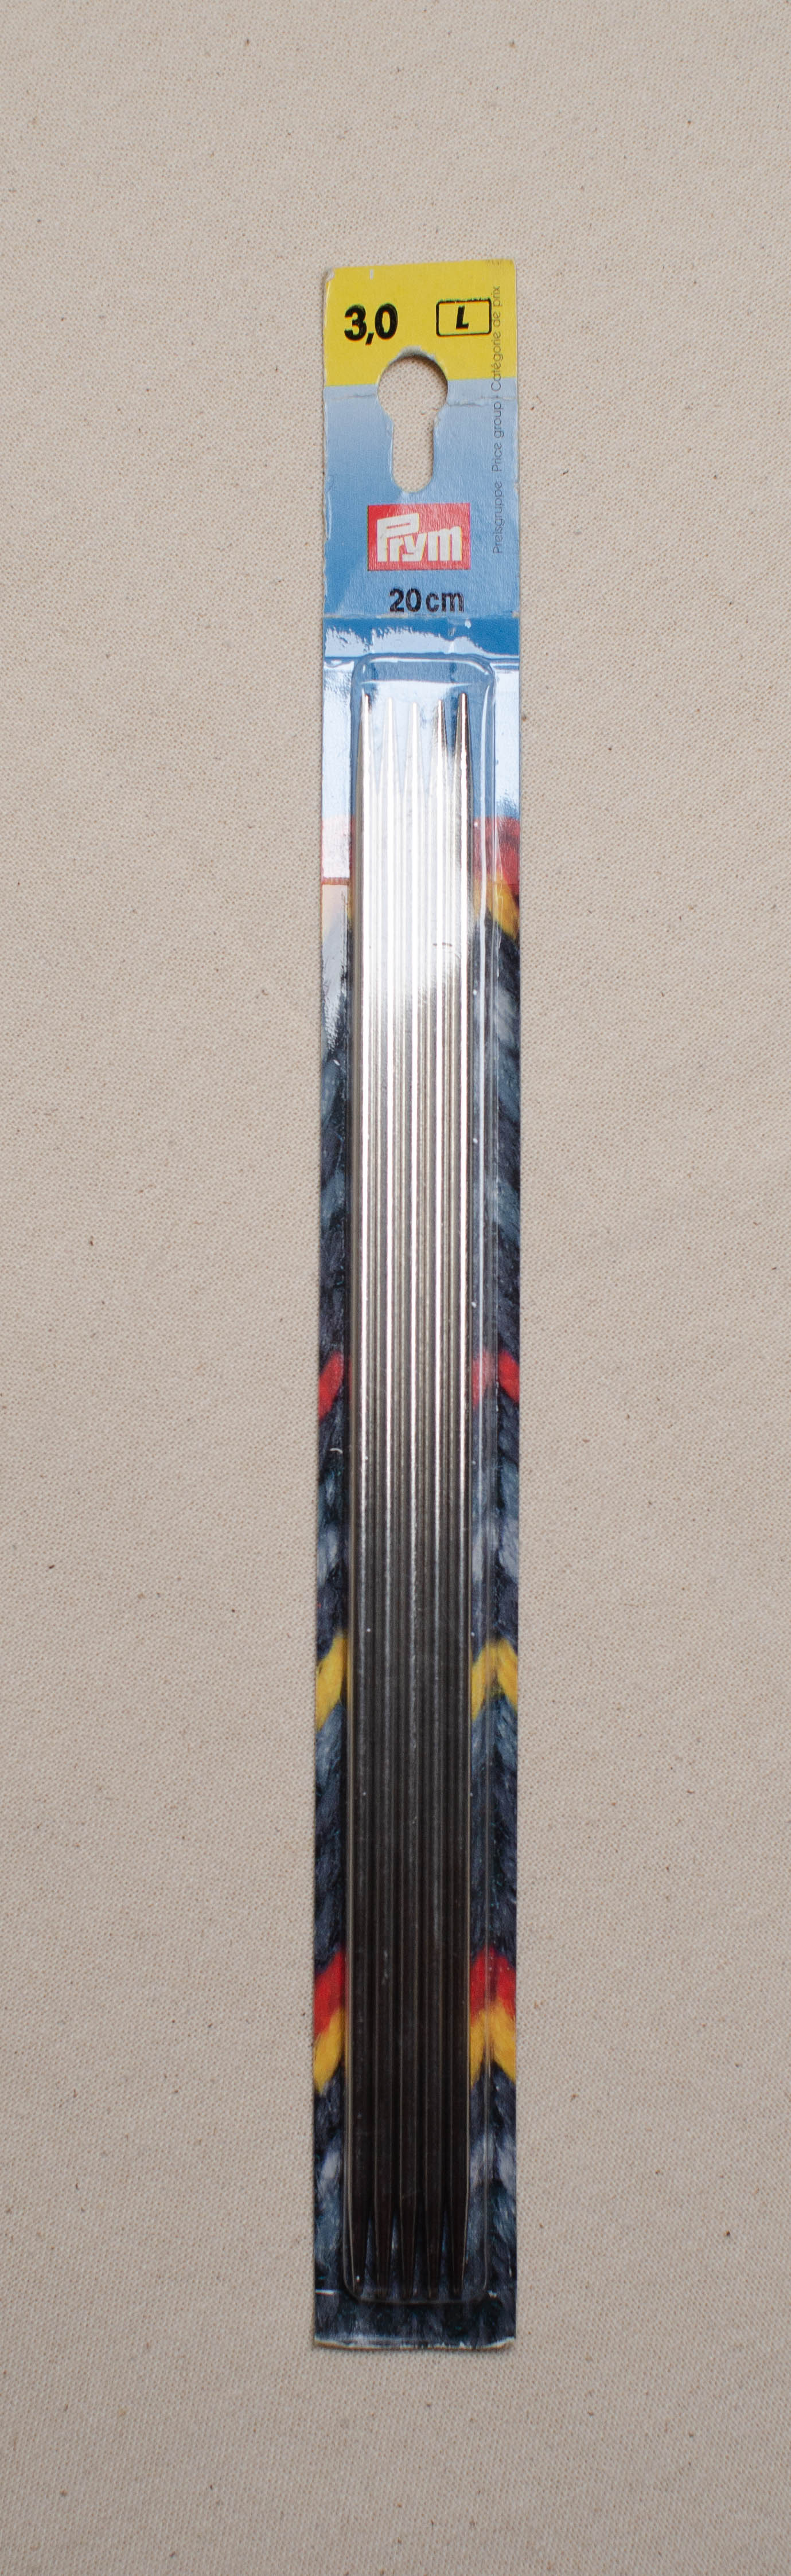 Prym 20cm Double Point Knitting Needles - 20cm X 3mm